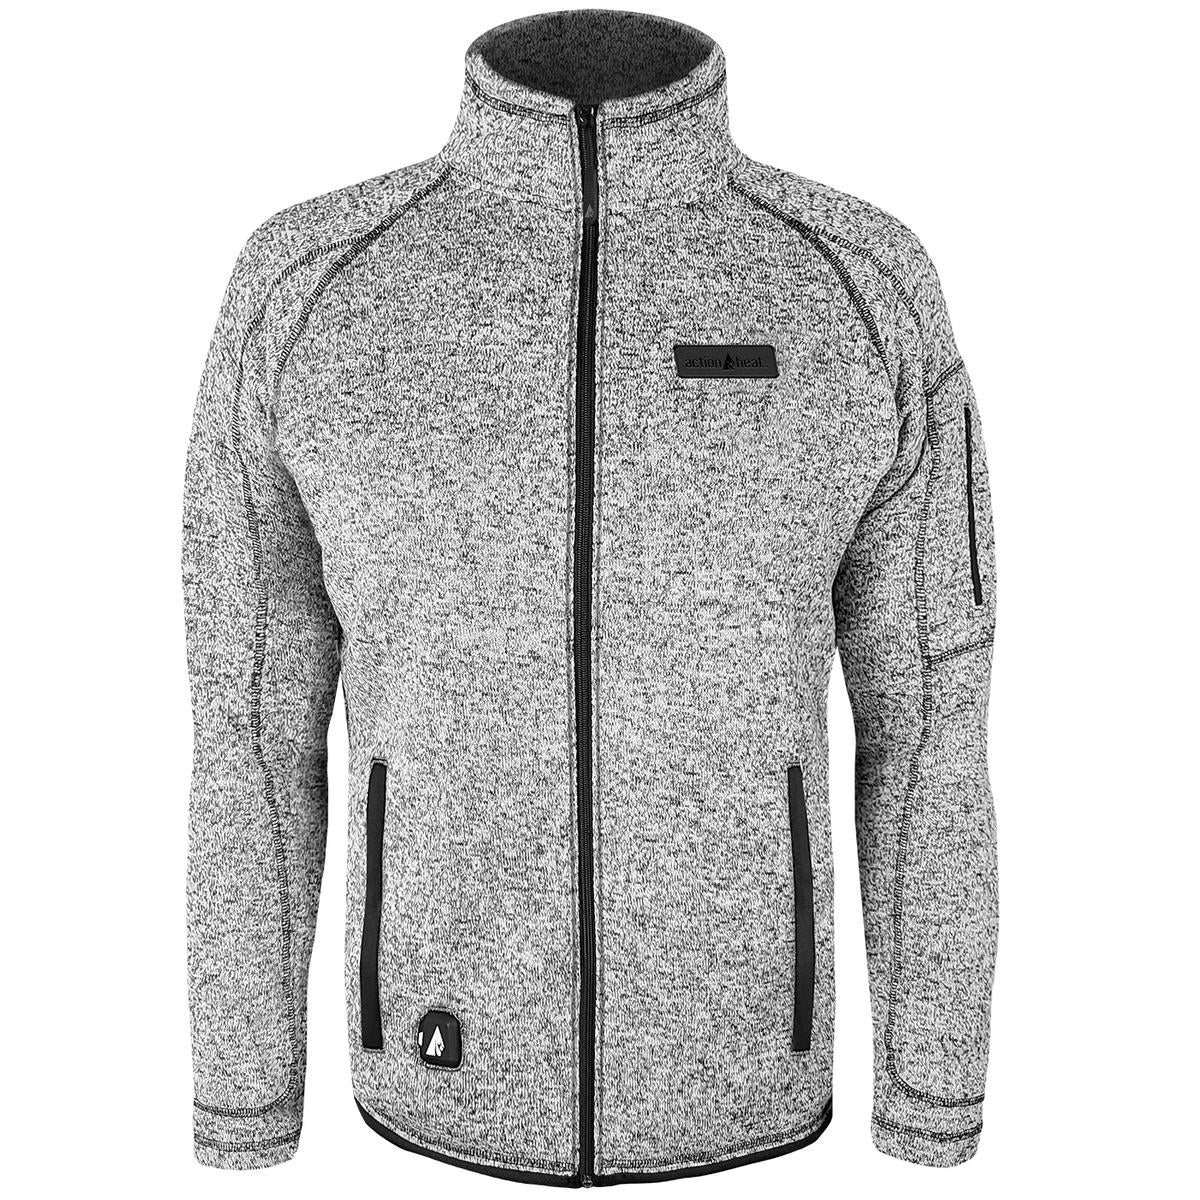 ActionHeat 5V Men's Battery Heated Sweater Jacket - Heated